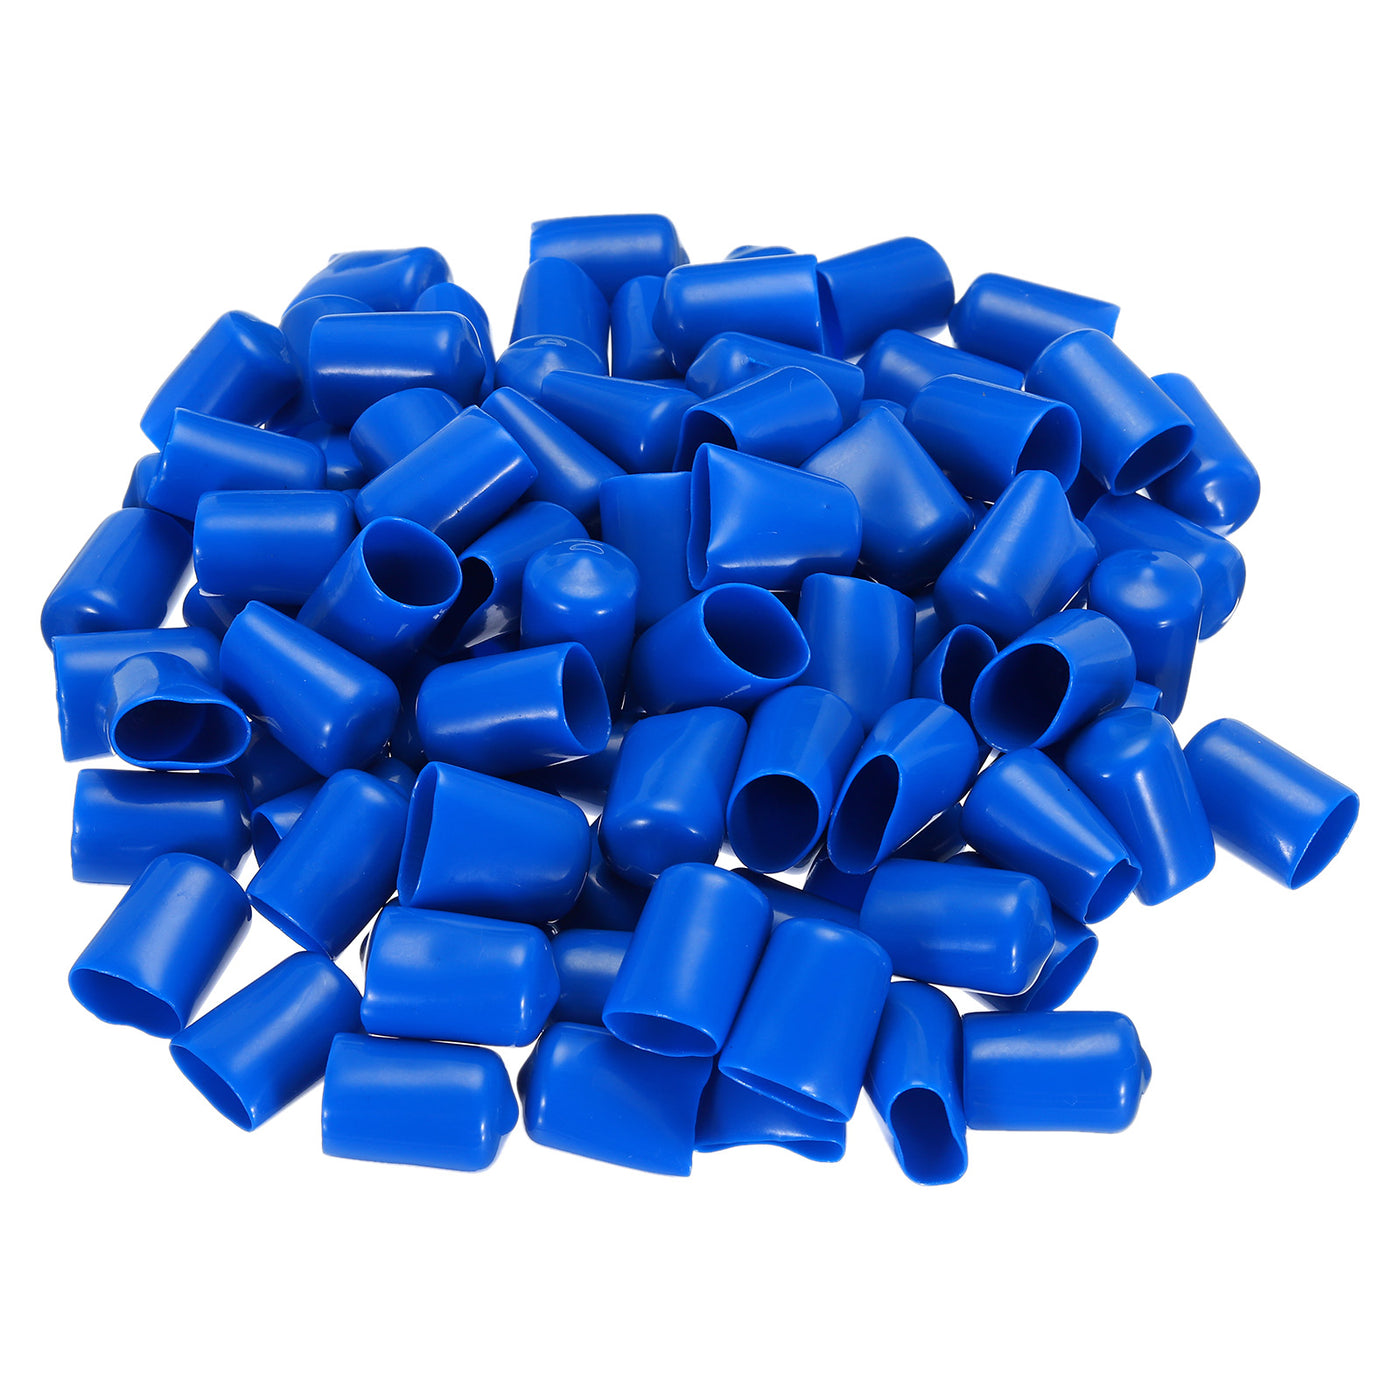 uxcell Uxcell 50pcs Rubber End Caps 14mm ID Vinyl PVC Round Tube Bolt Cap Cover Screw Thread Protectors Blue